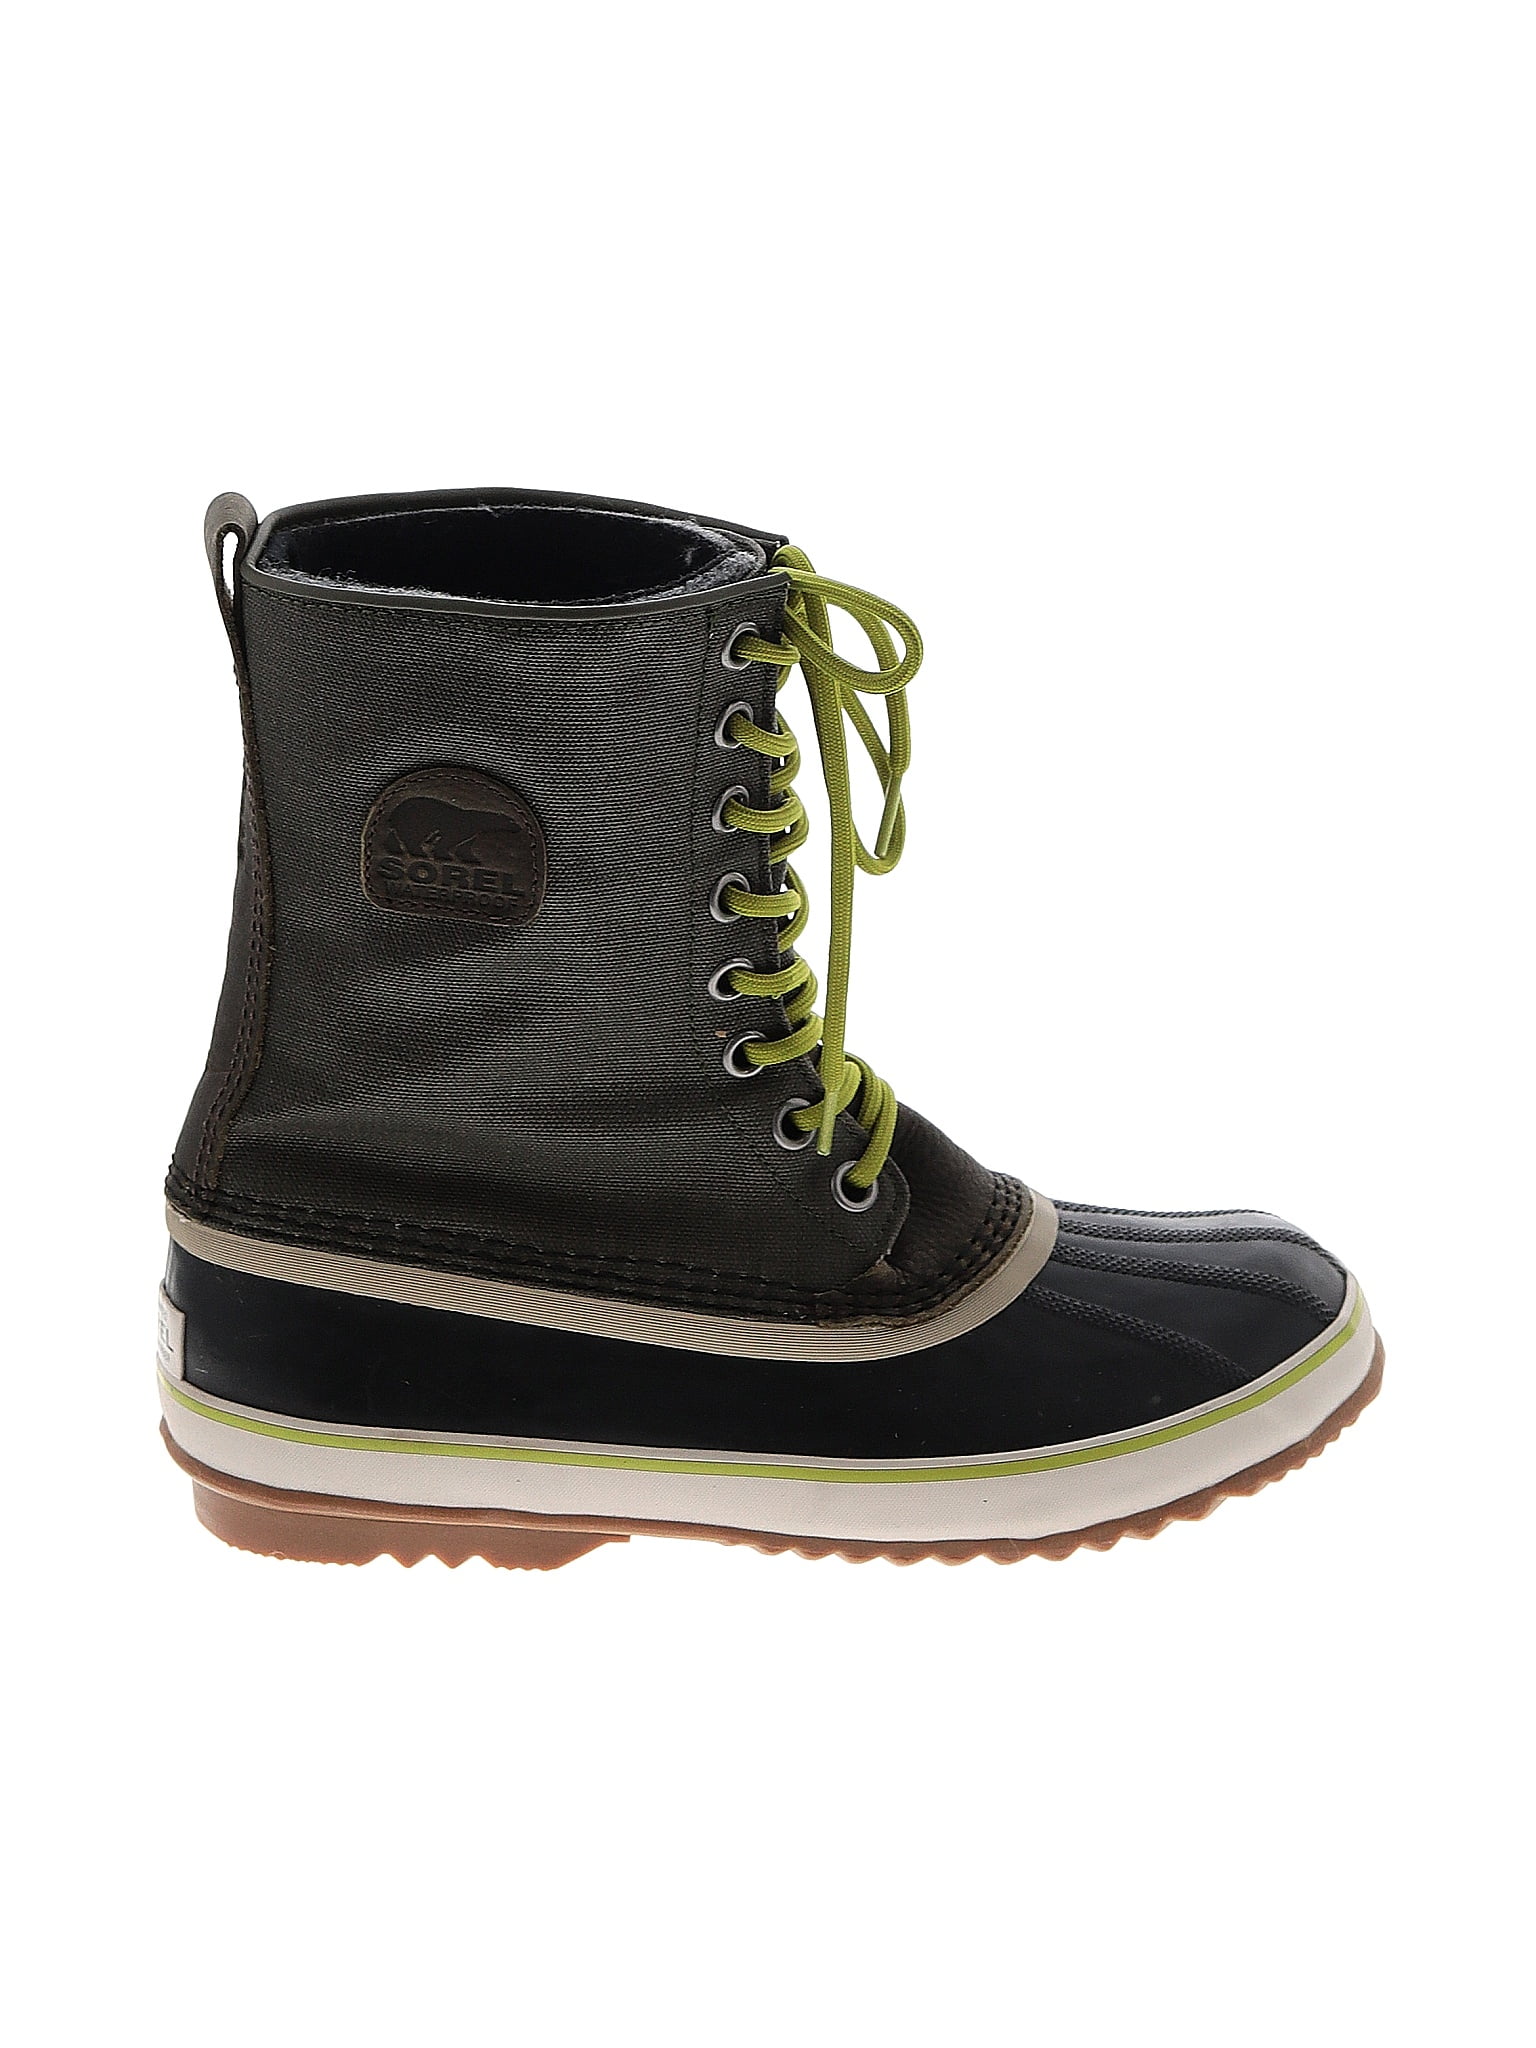 Sorel Black Gray Ankle Boots Size 11 - 50% off | thredUP